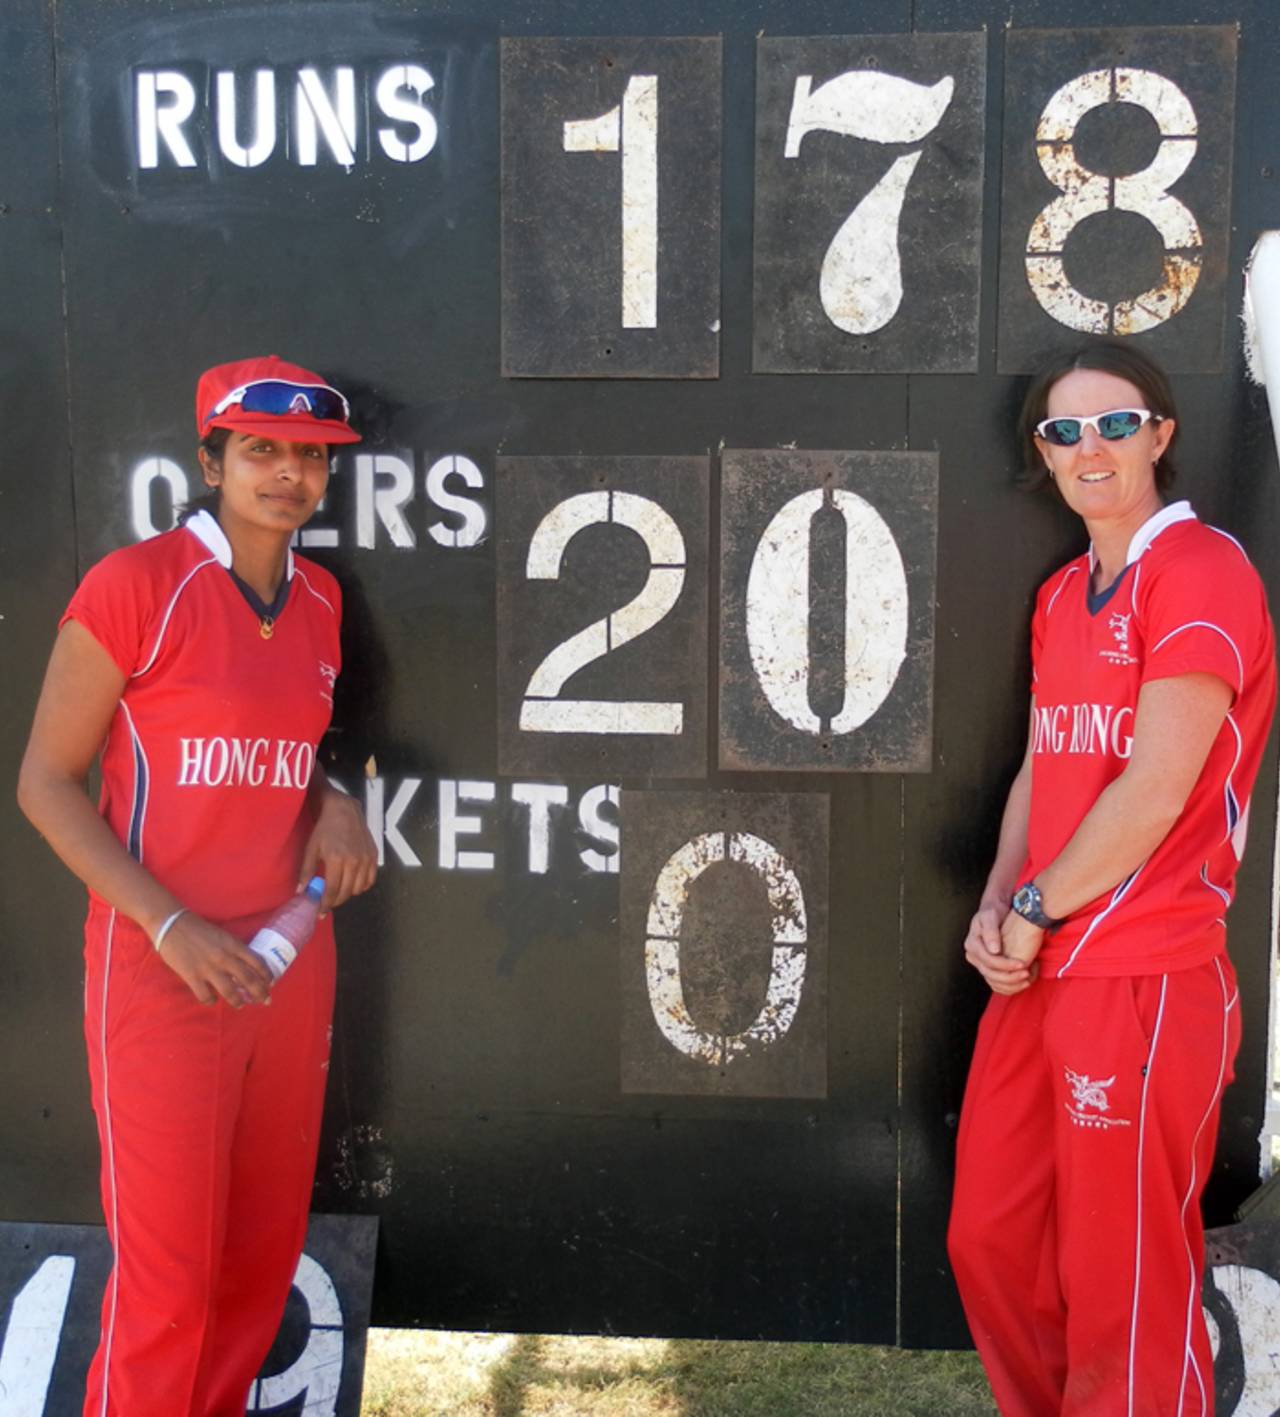 Hong Kong's Keenu Gill (58*) and Neisha Pratt (88*) shared in an unbeaten opening partnership worth 178 runs against Oman at the ACC Women's Twenty20 Championships played at Hubara, Kuwait on 19th February 2011 